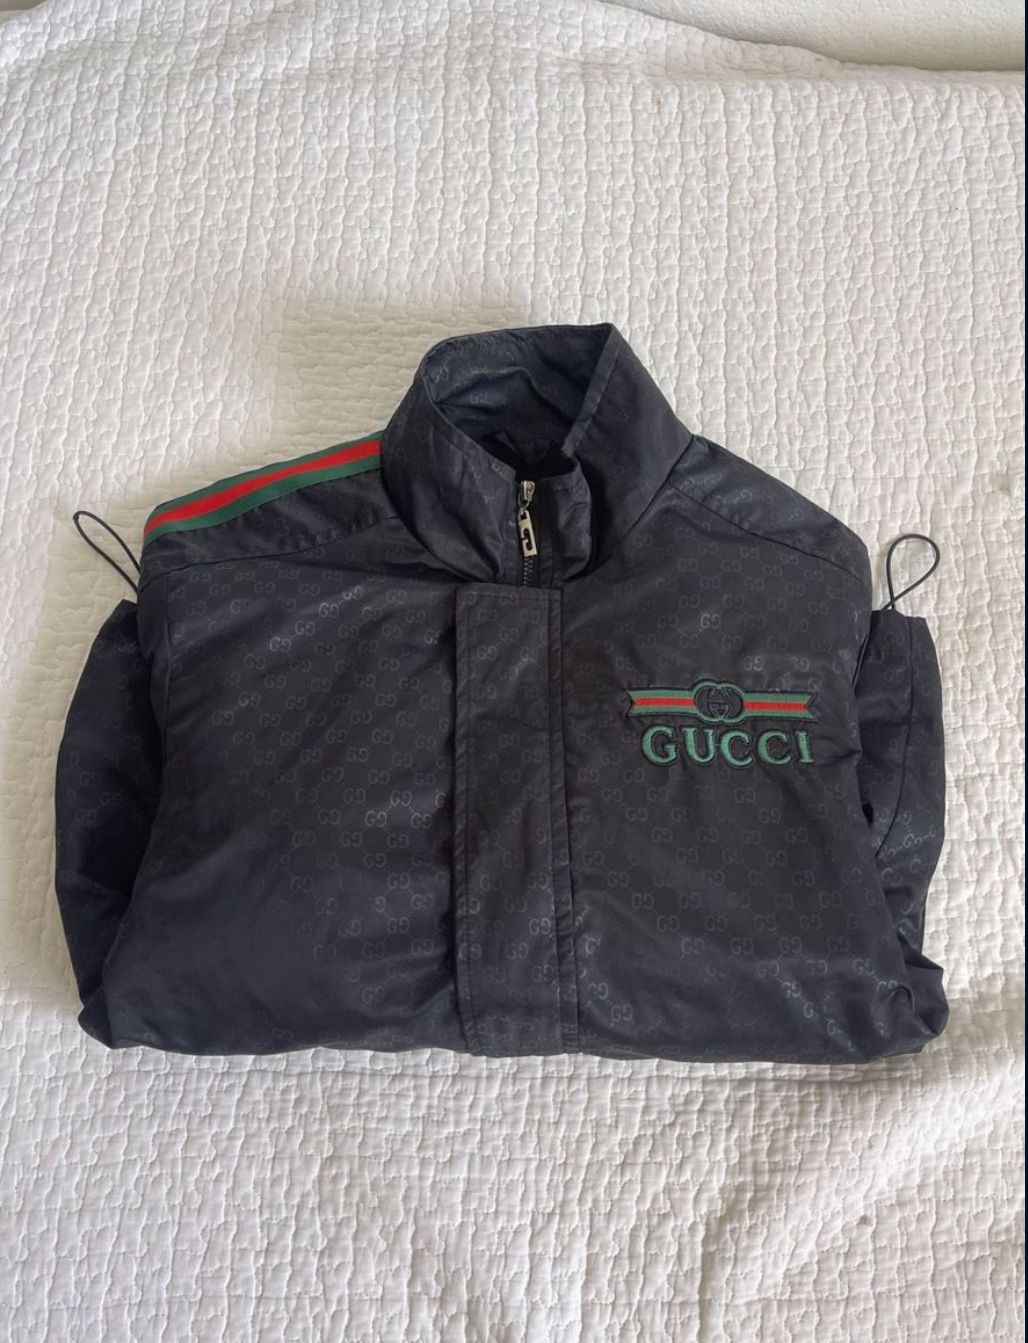 Gucci Waterproof Rain Jacket Size S